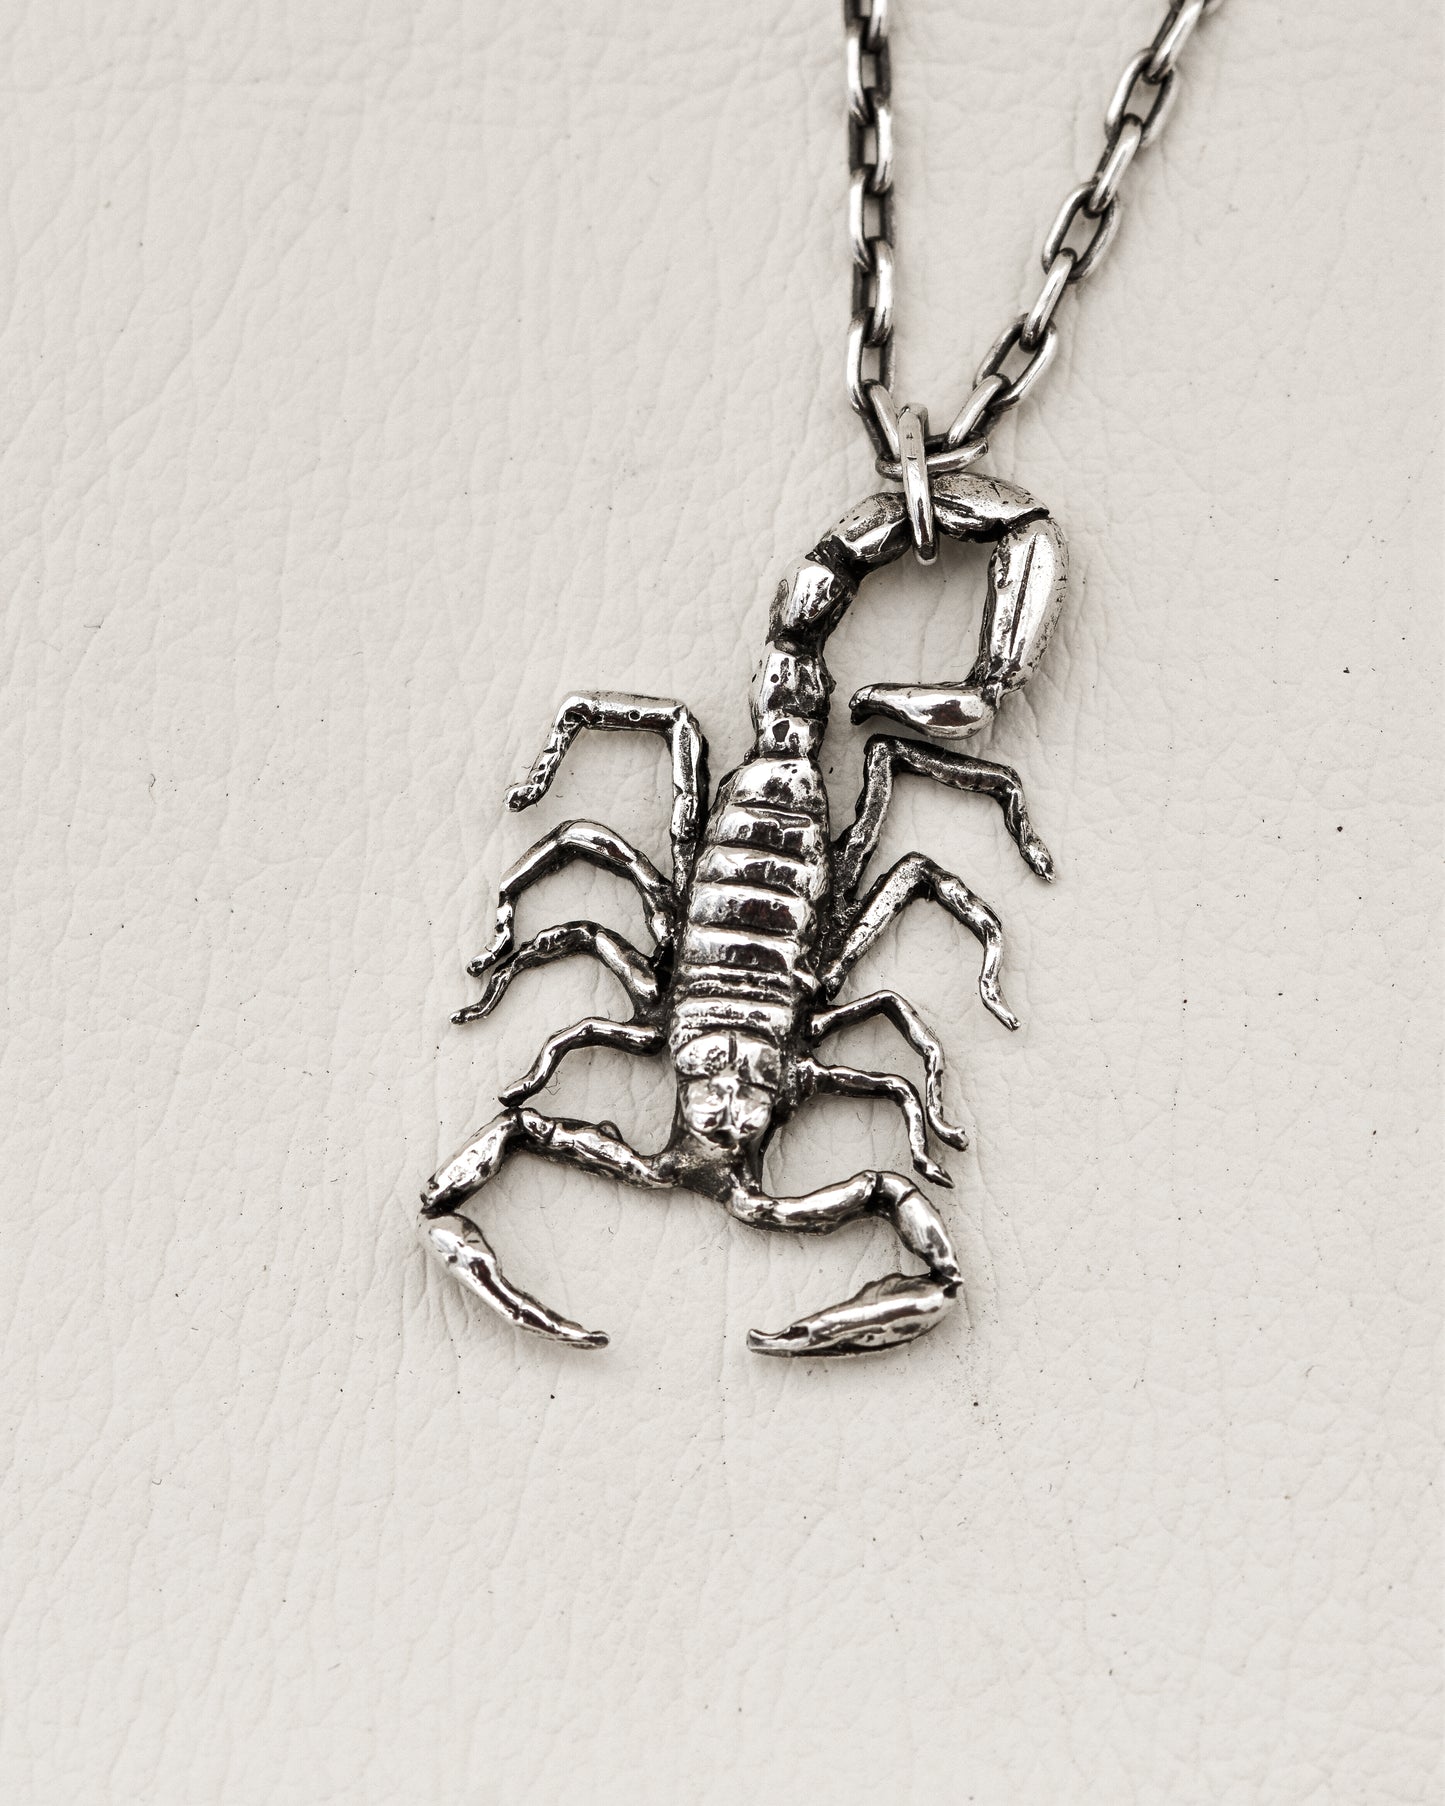 The Scorpius Necklace